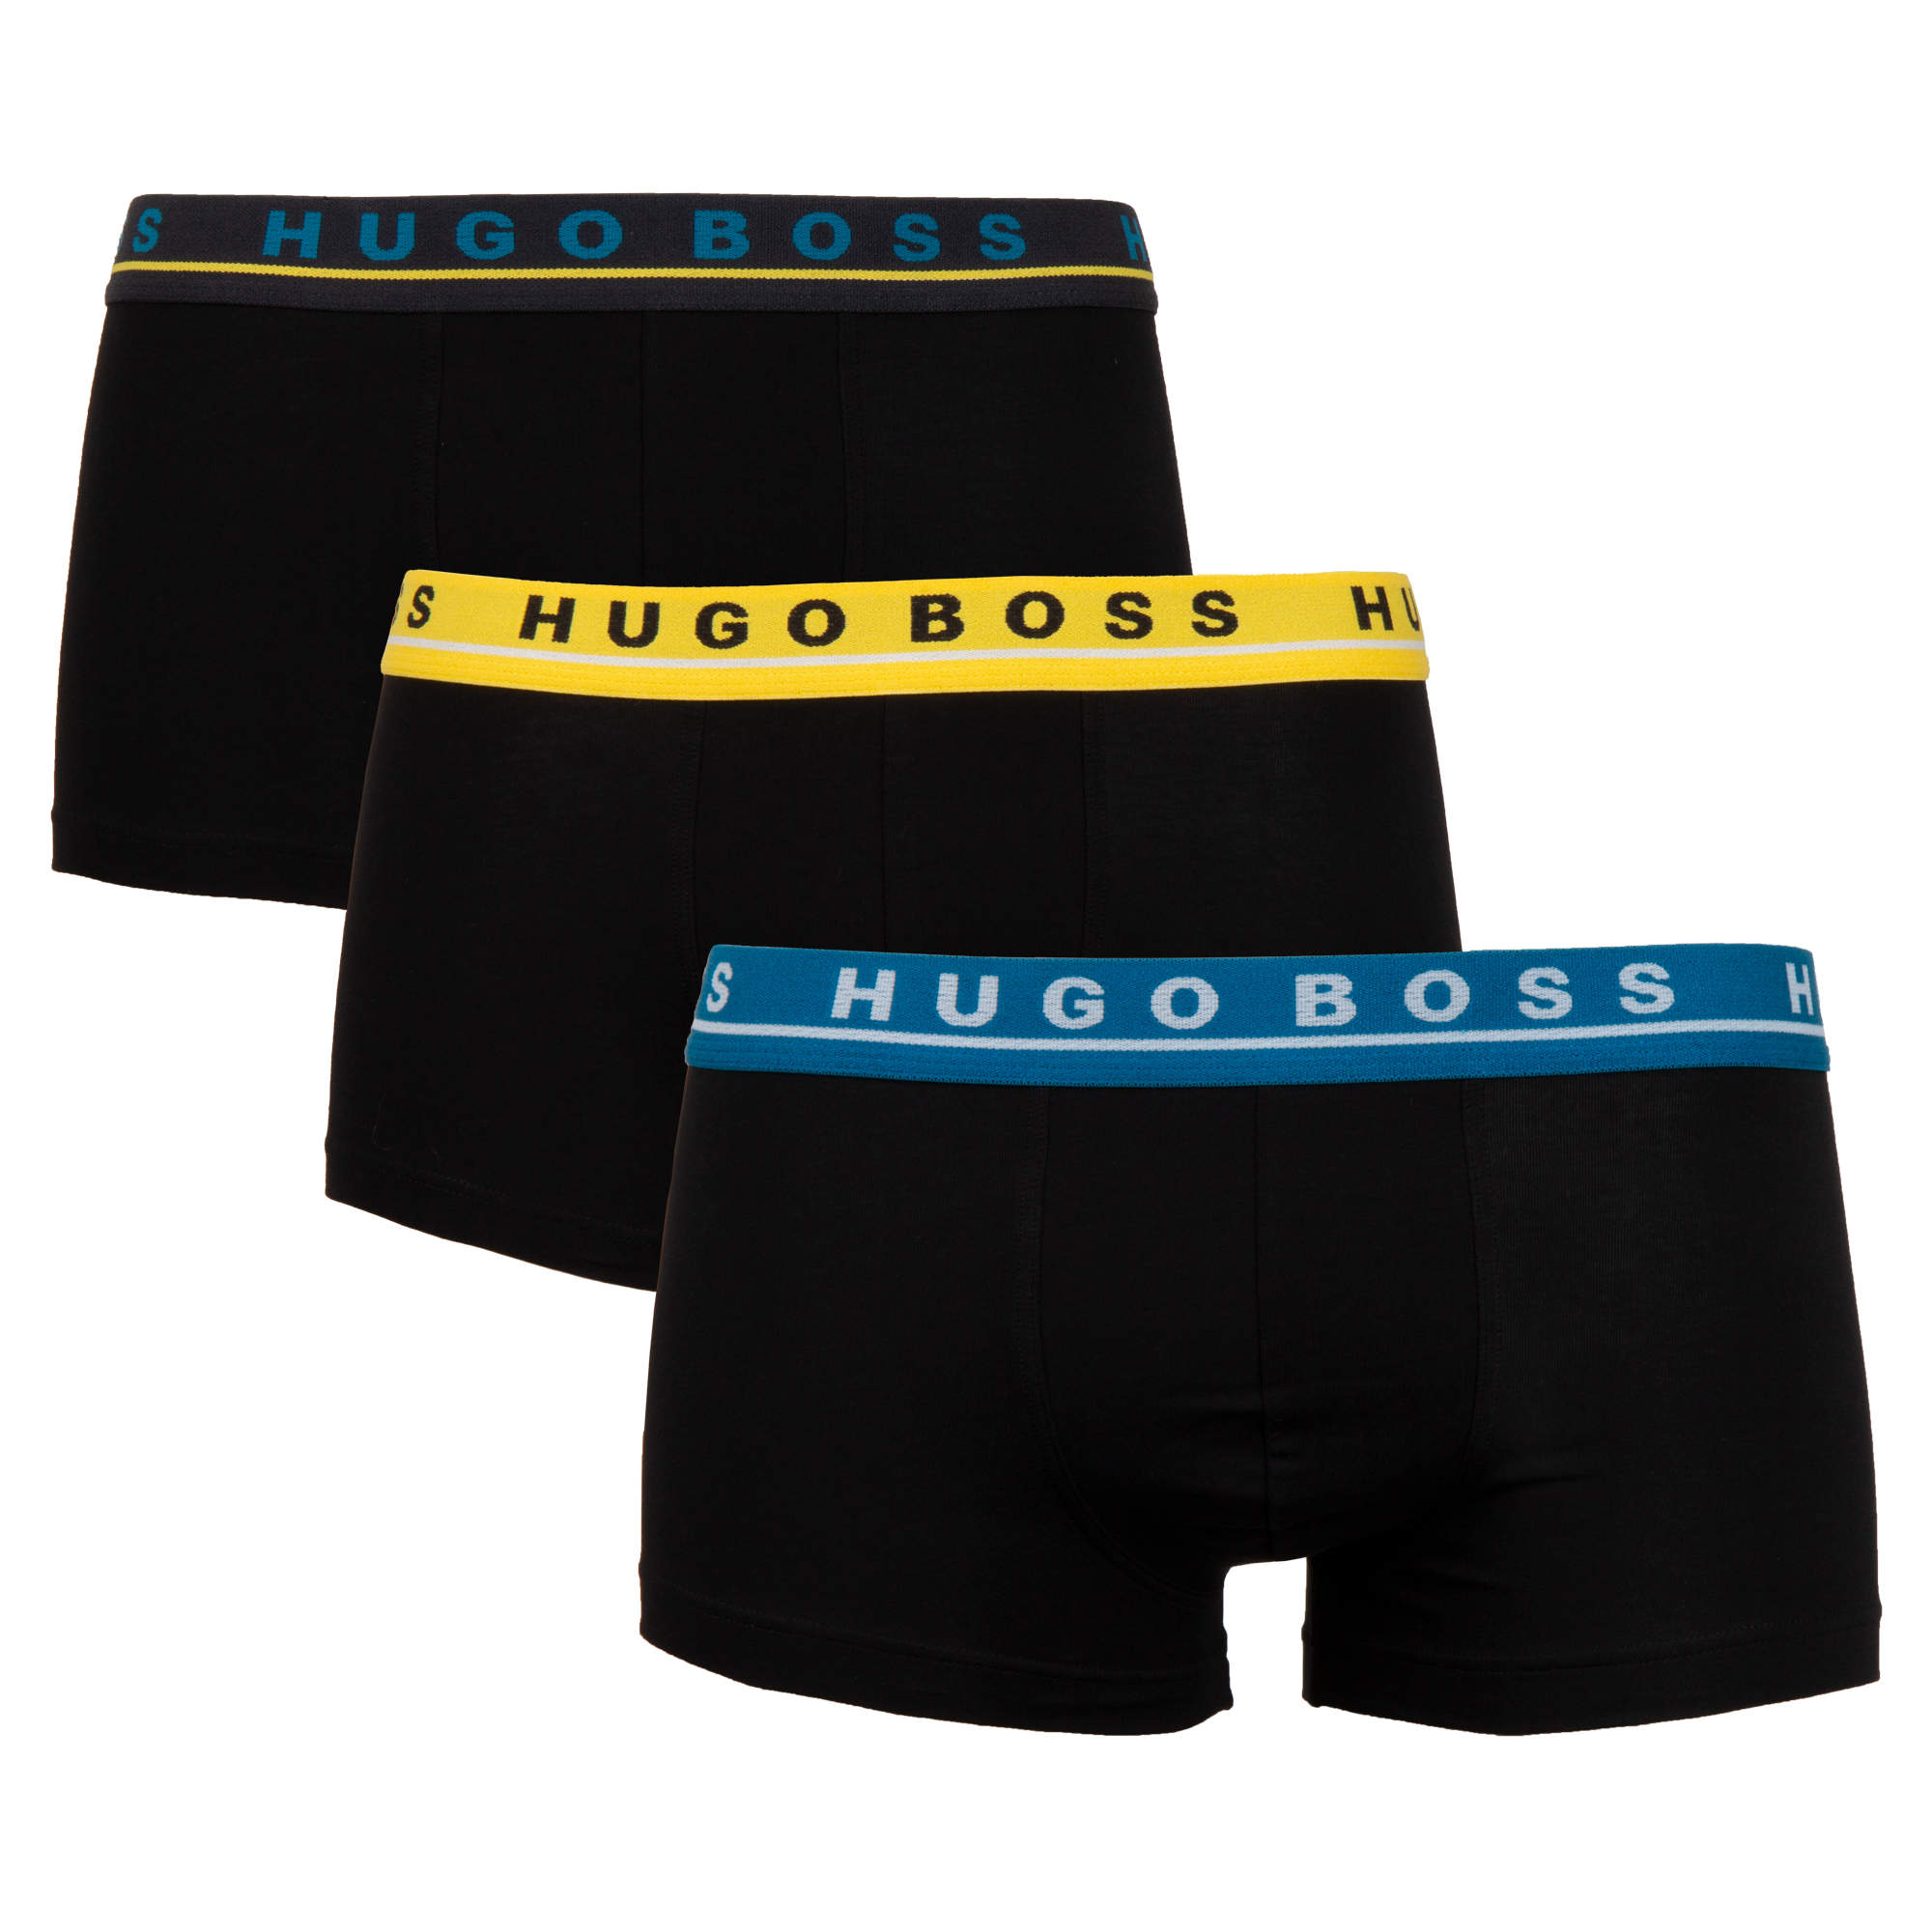 Boxers Hugo Boss Brief Homme (lot de 3)